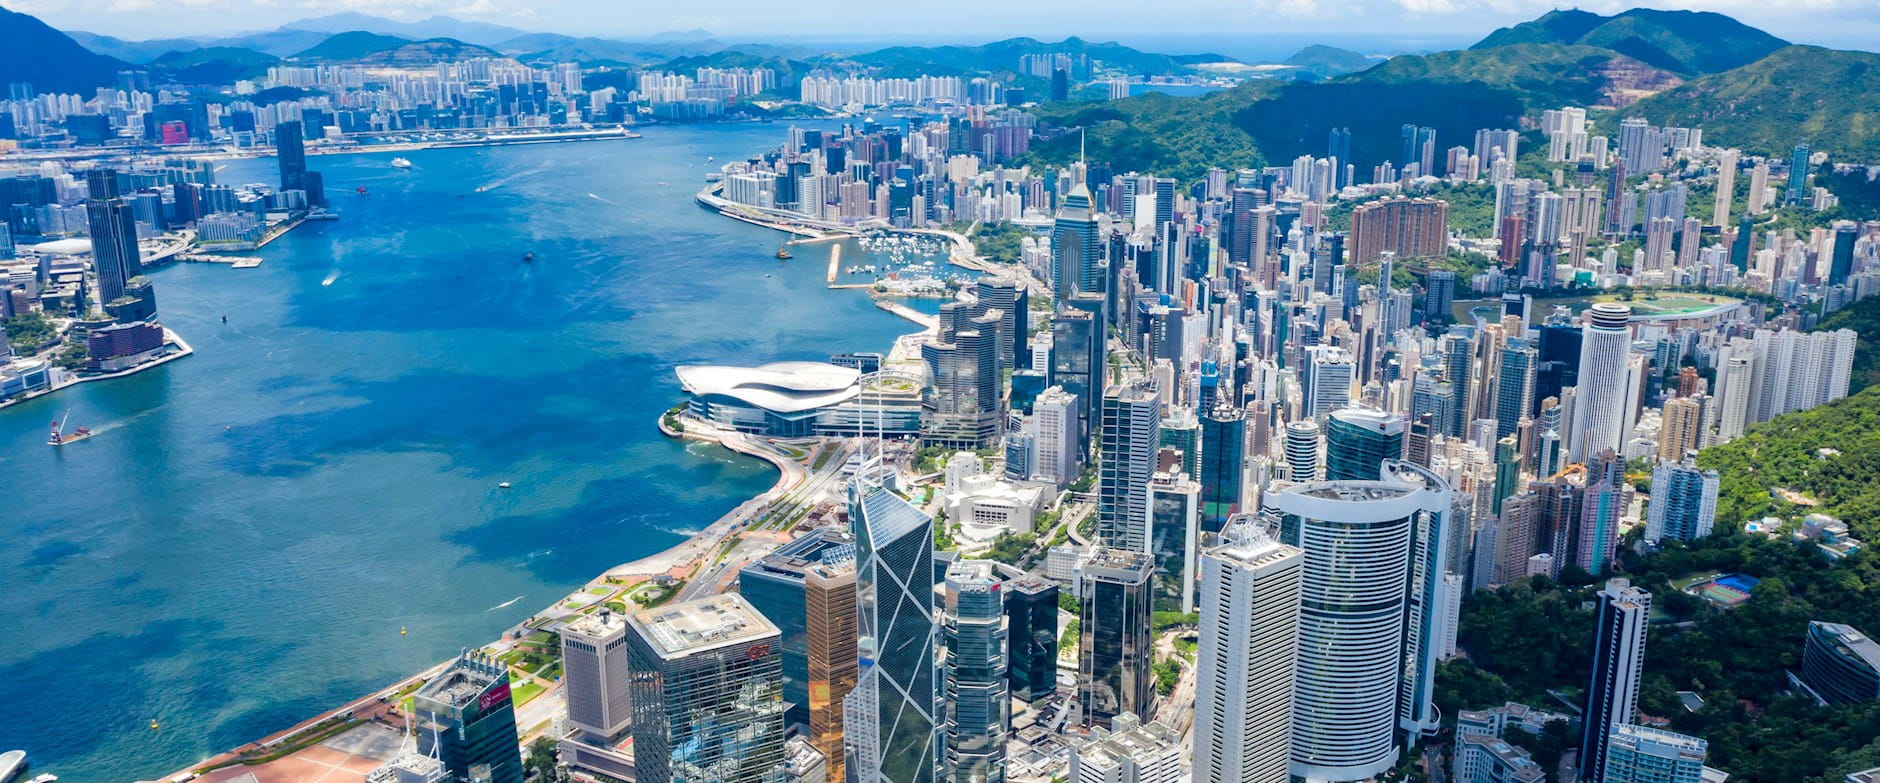 View of downtown Hong Kong city and the South China Sea